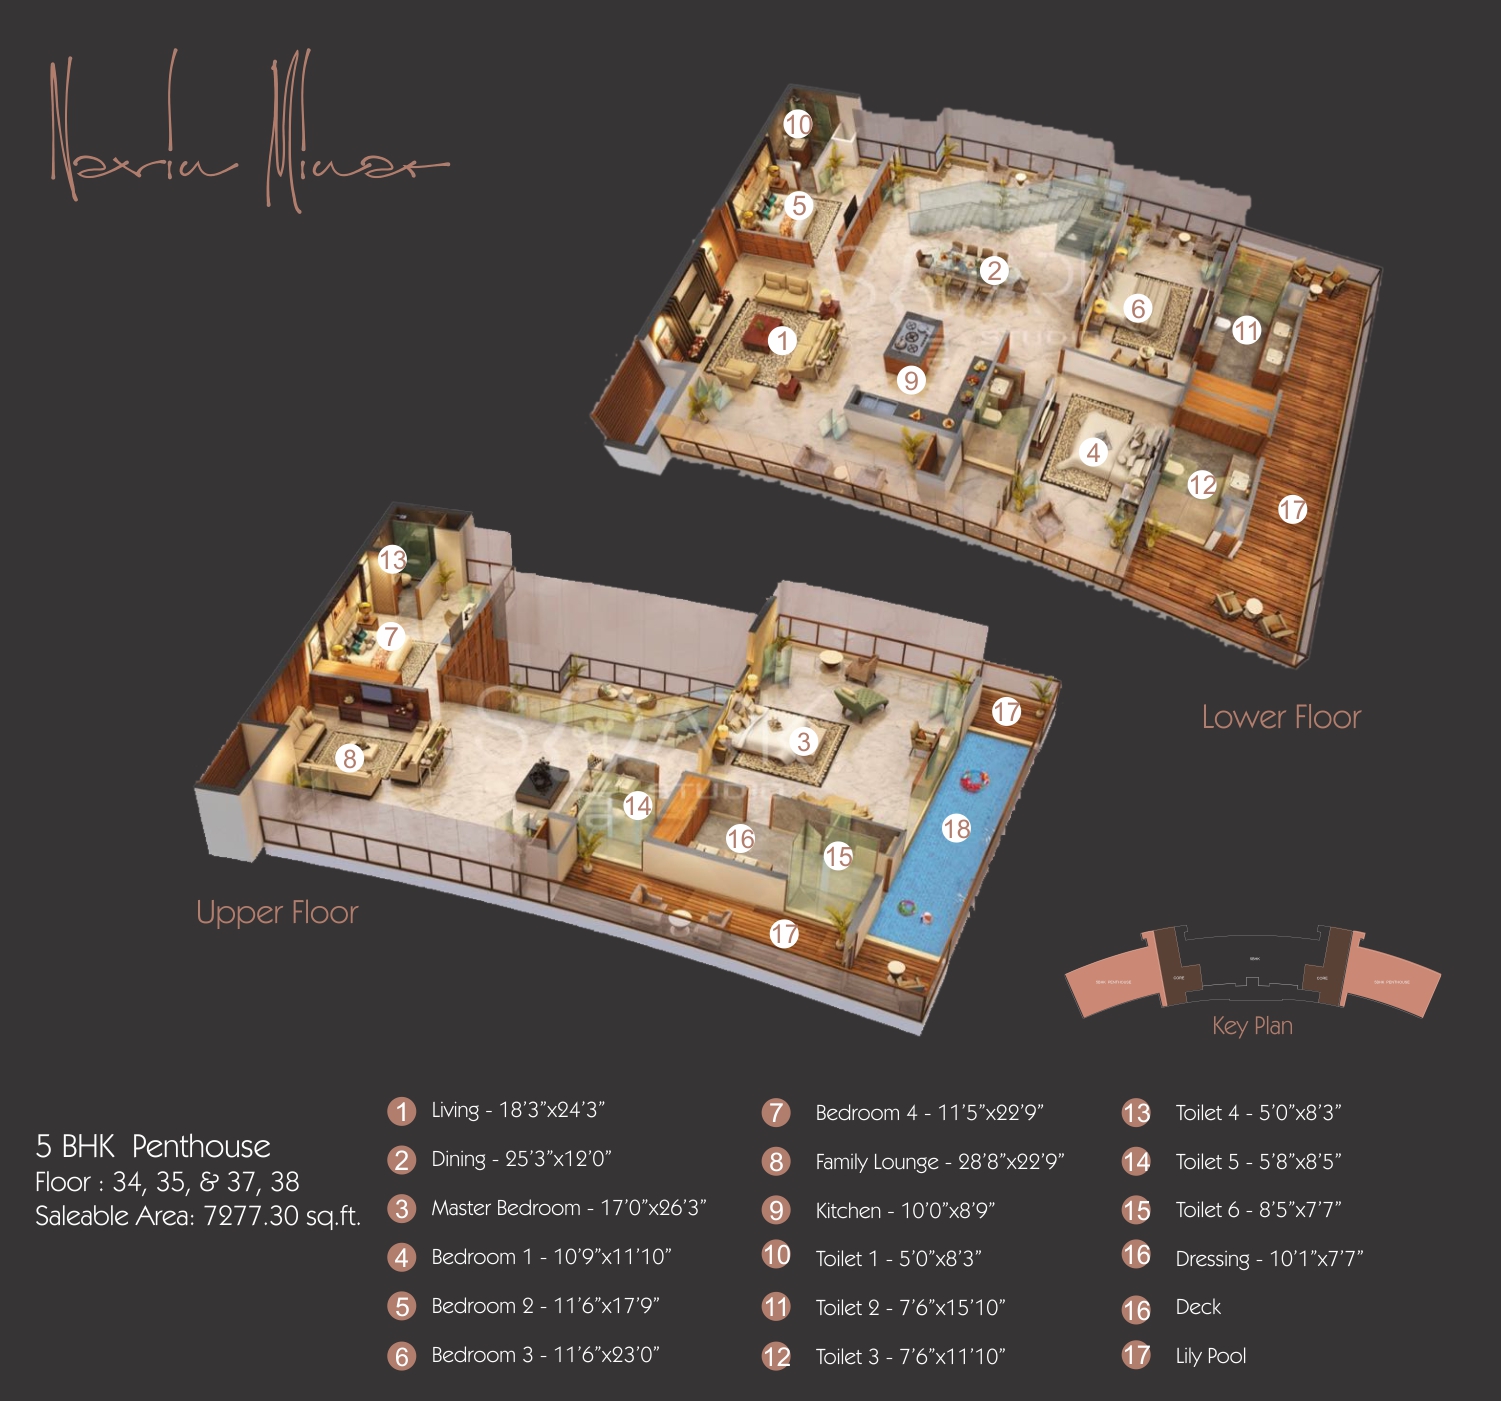 The Leela Sky Villas Central Delhi - Price List, Floor Plan